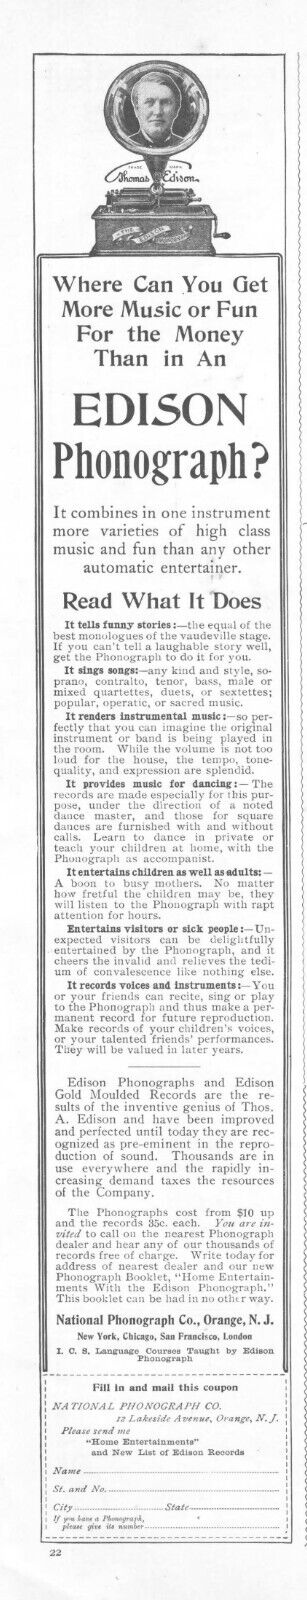 1905 Edison Phonograph Antique Print Ad More Music More Fun